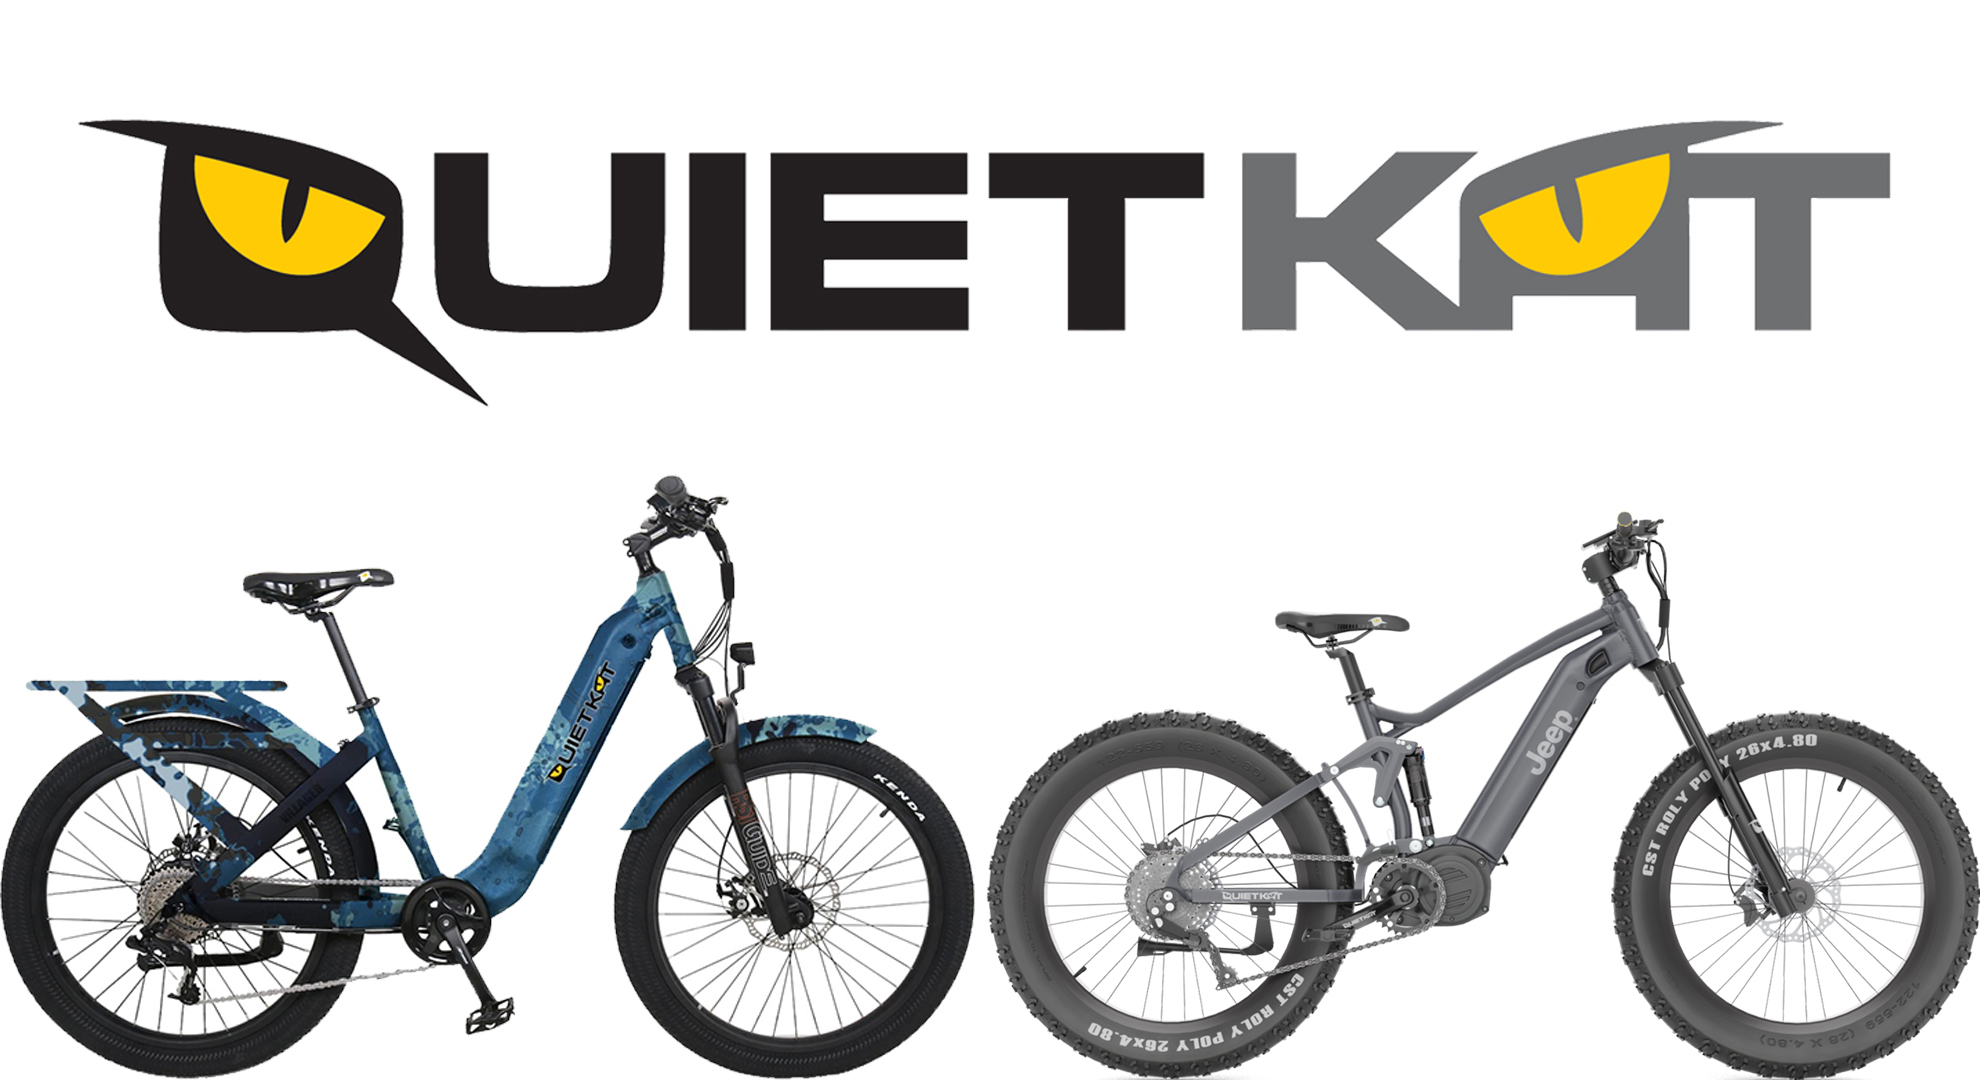 Quietkat e-bikes